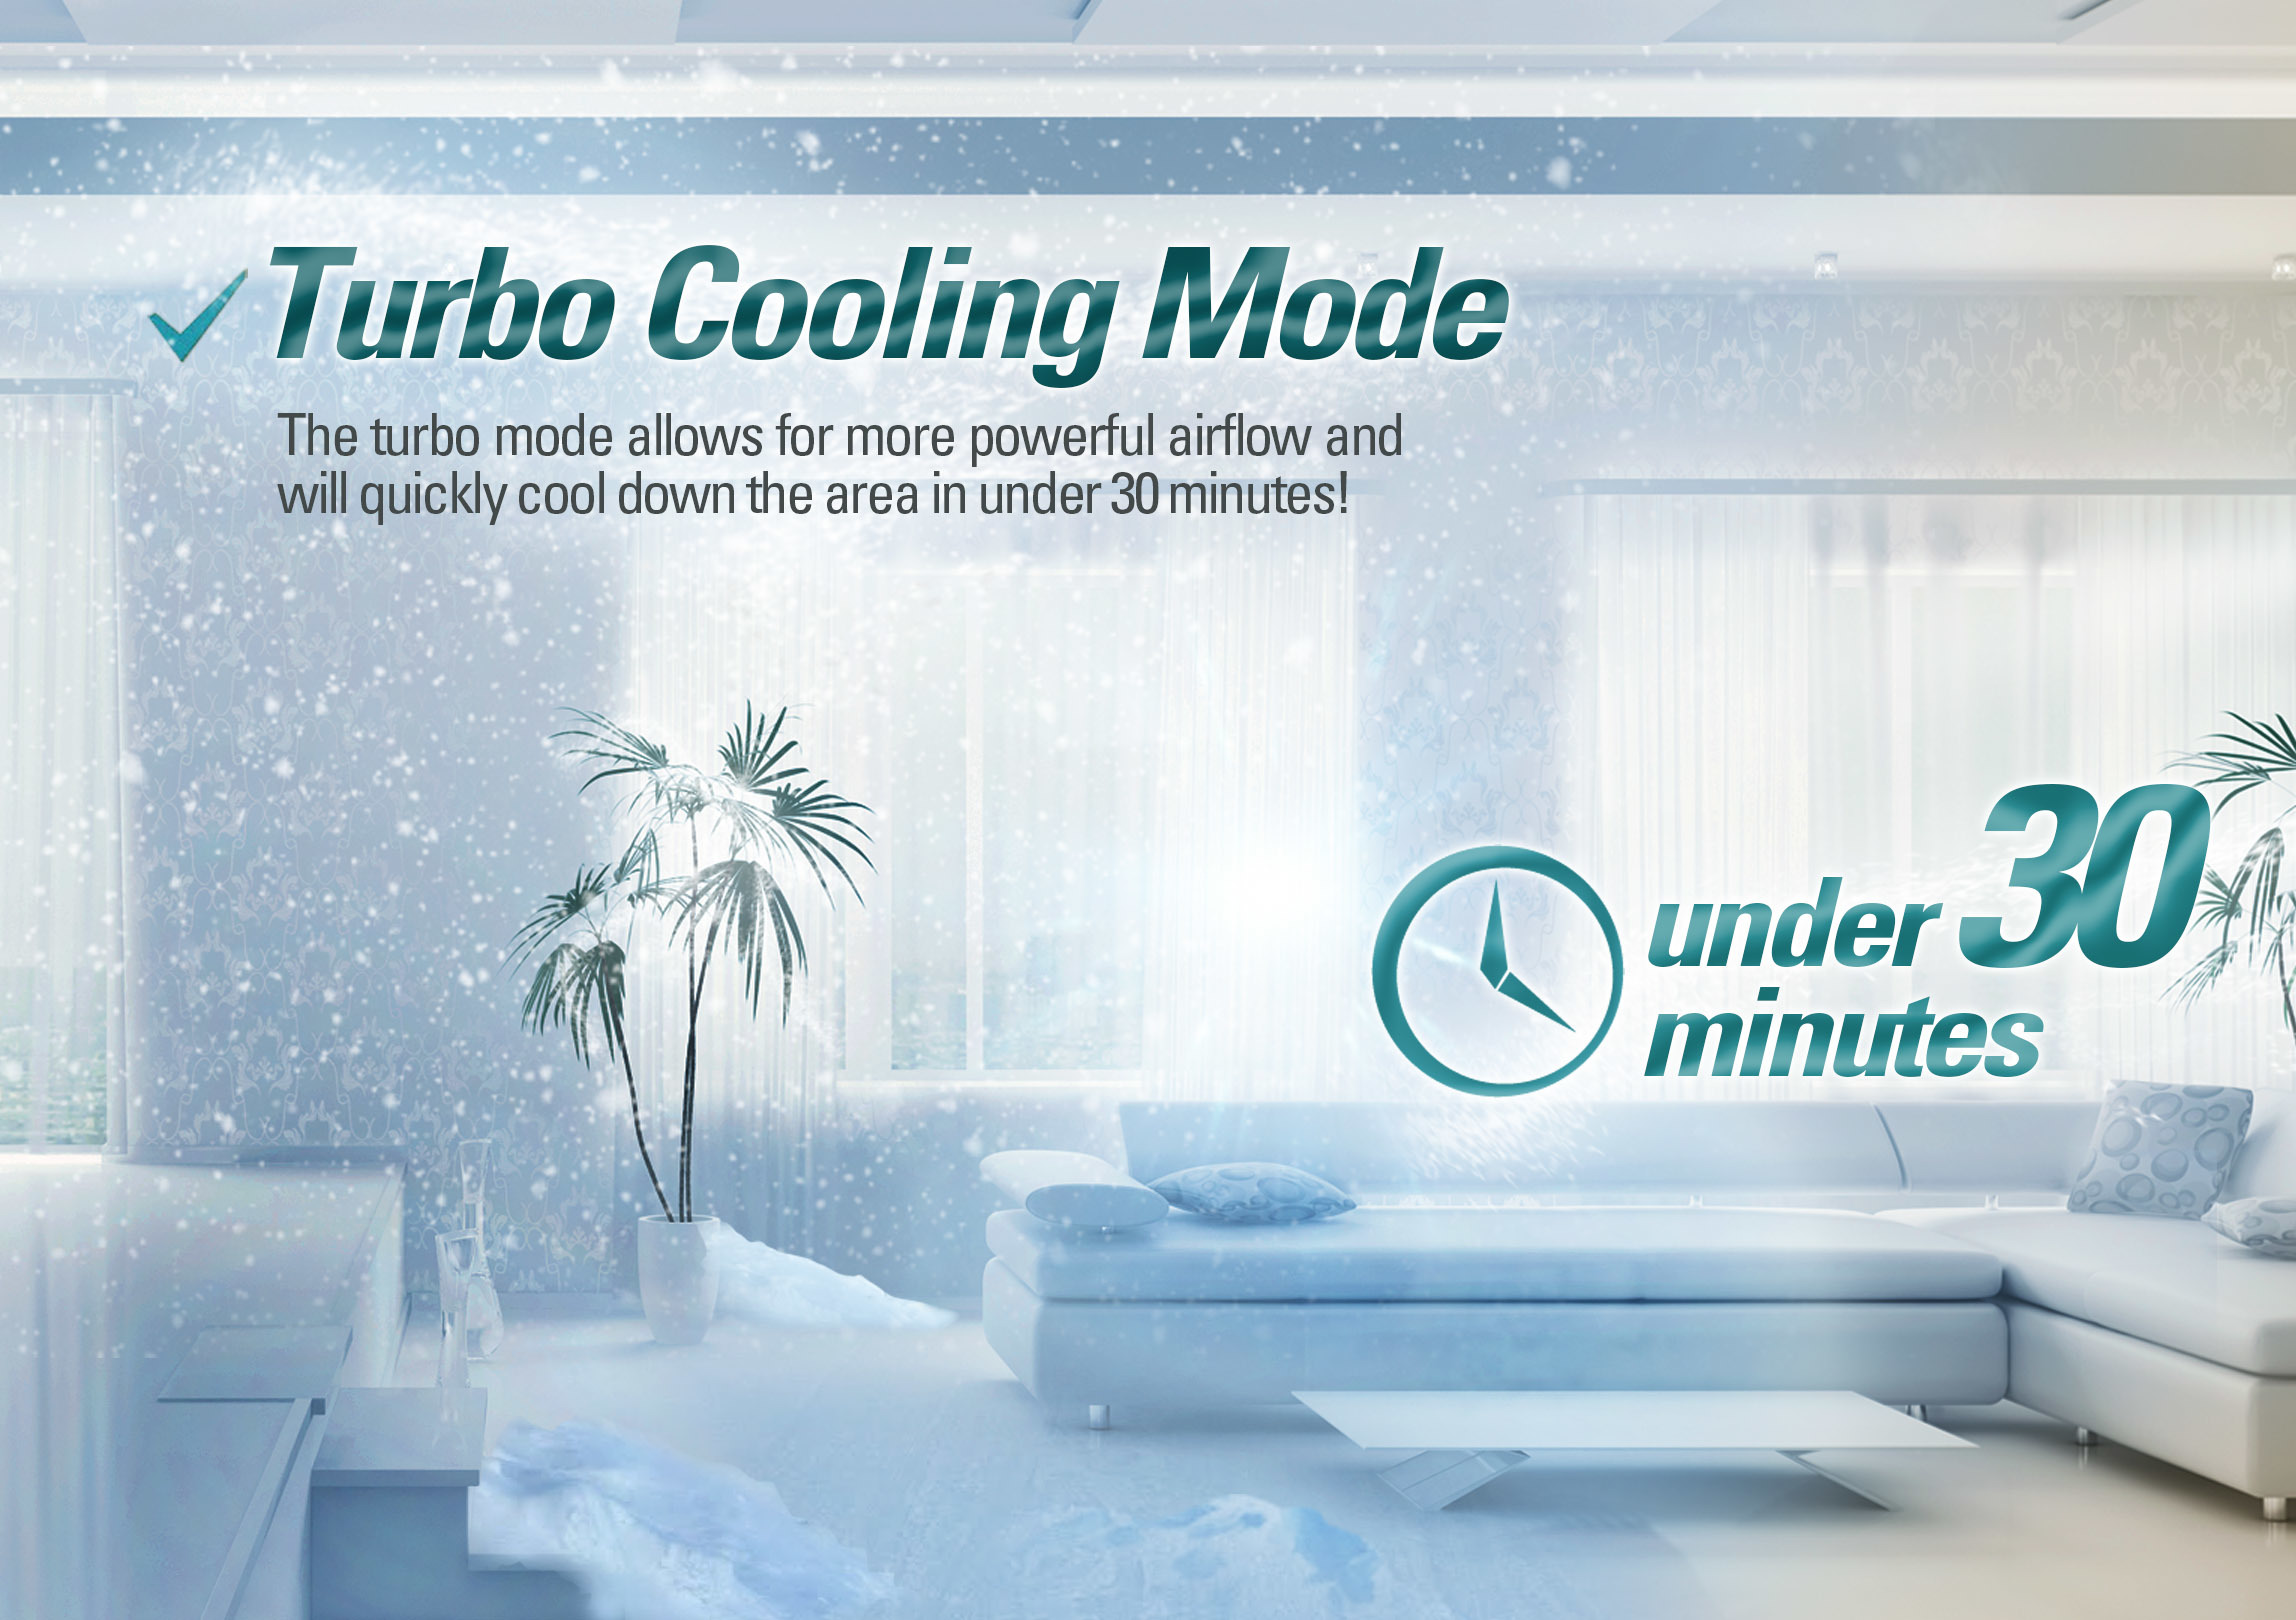 Sub-Zero Air Conditioning & Refrigeration